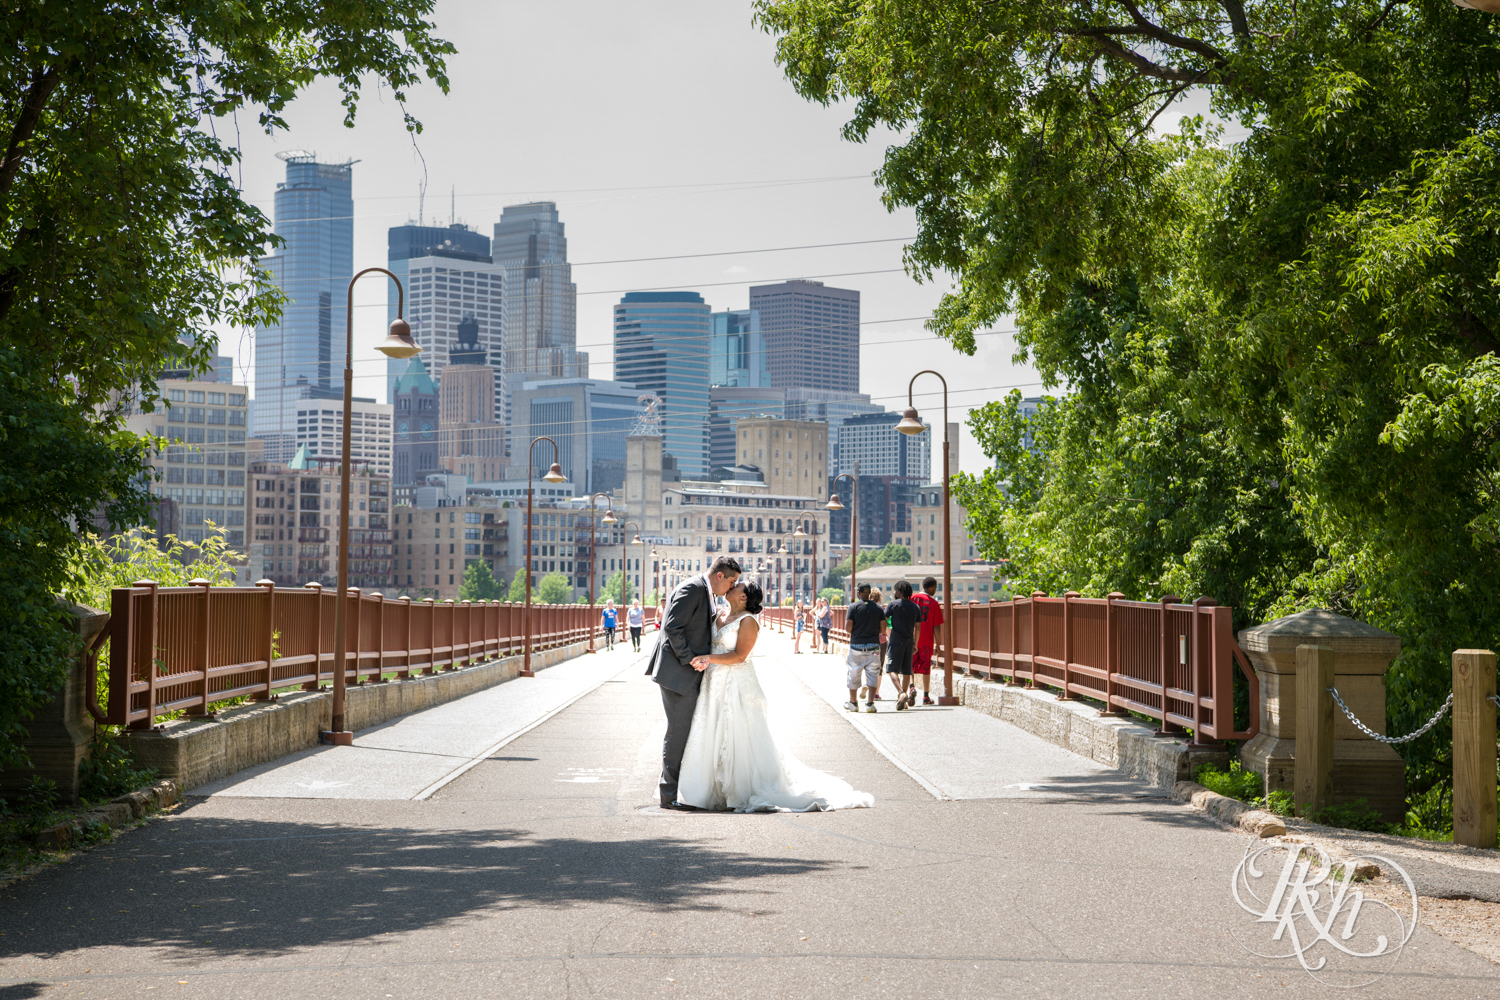 Bride and groom kiss on the Stone Arch Bridge in Minneapolis, Minnesota.